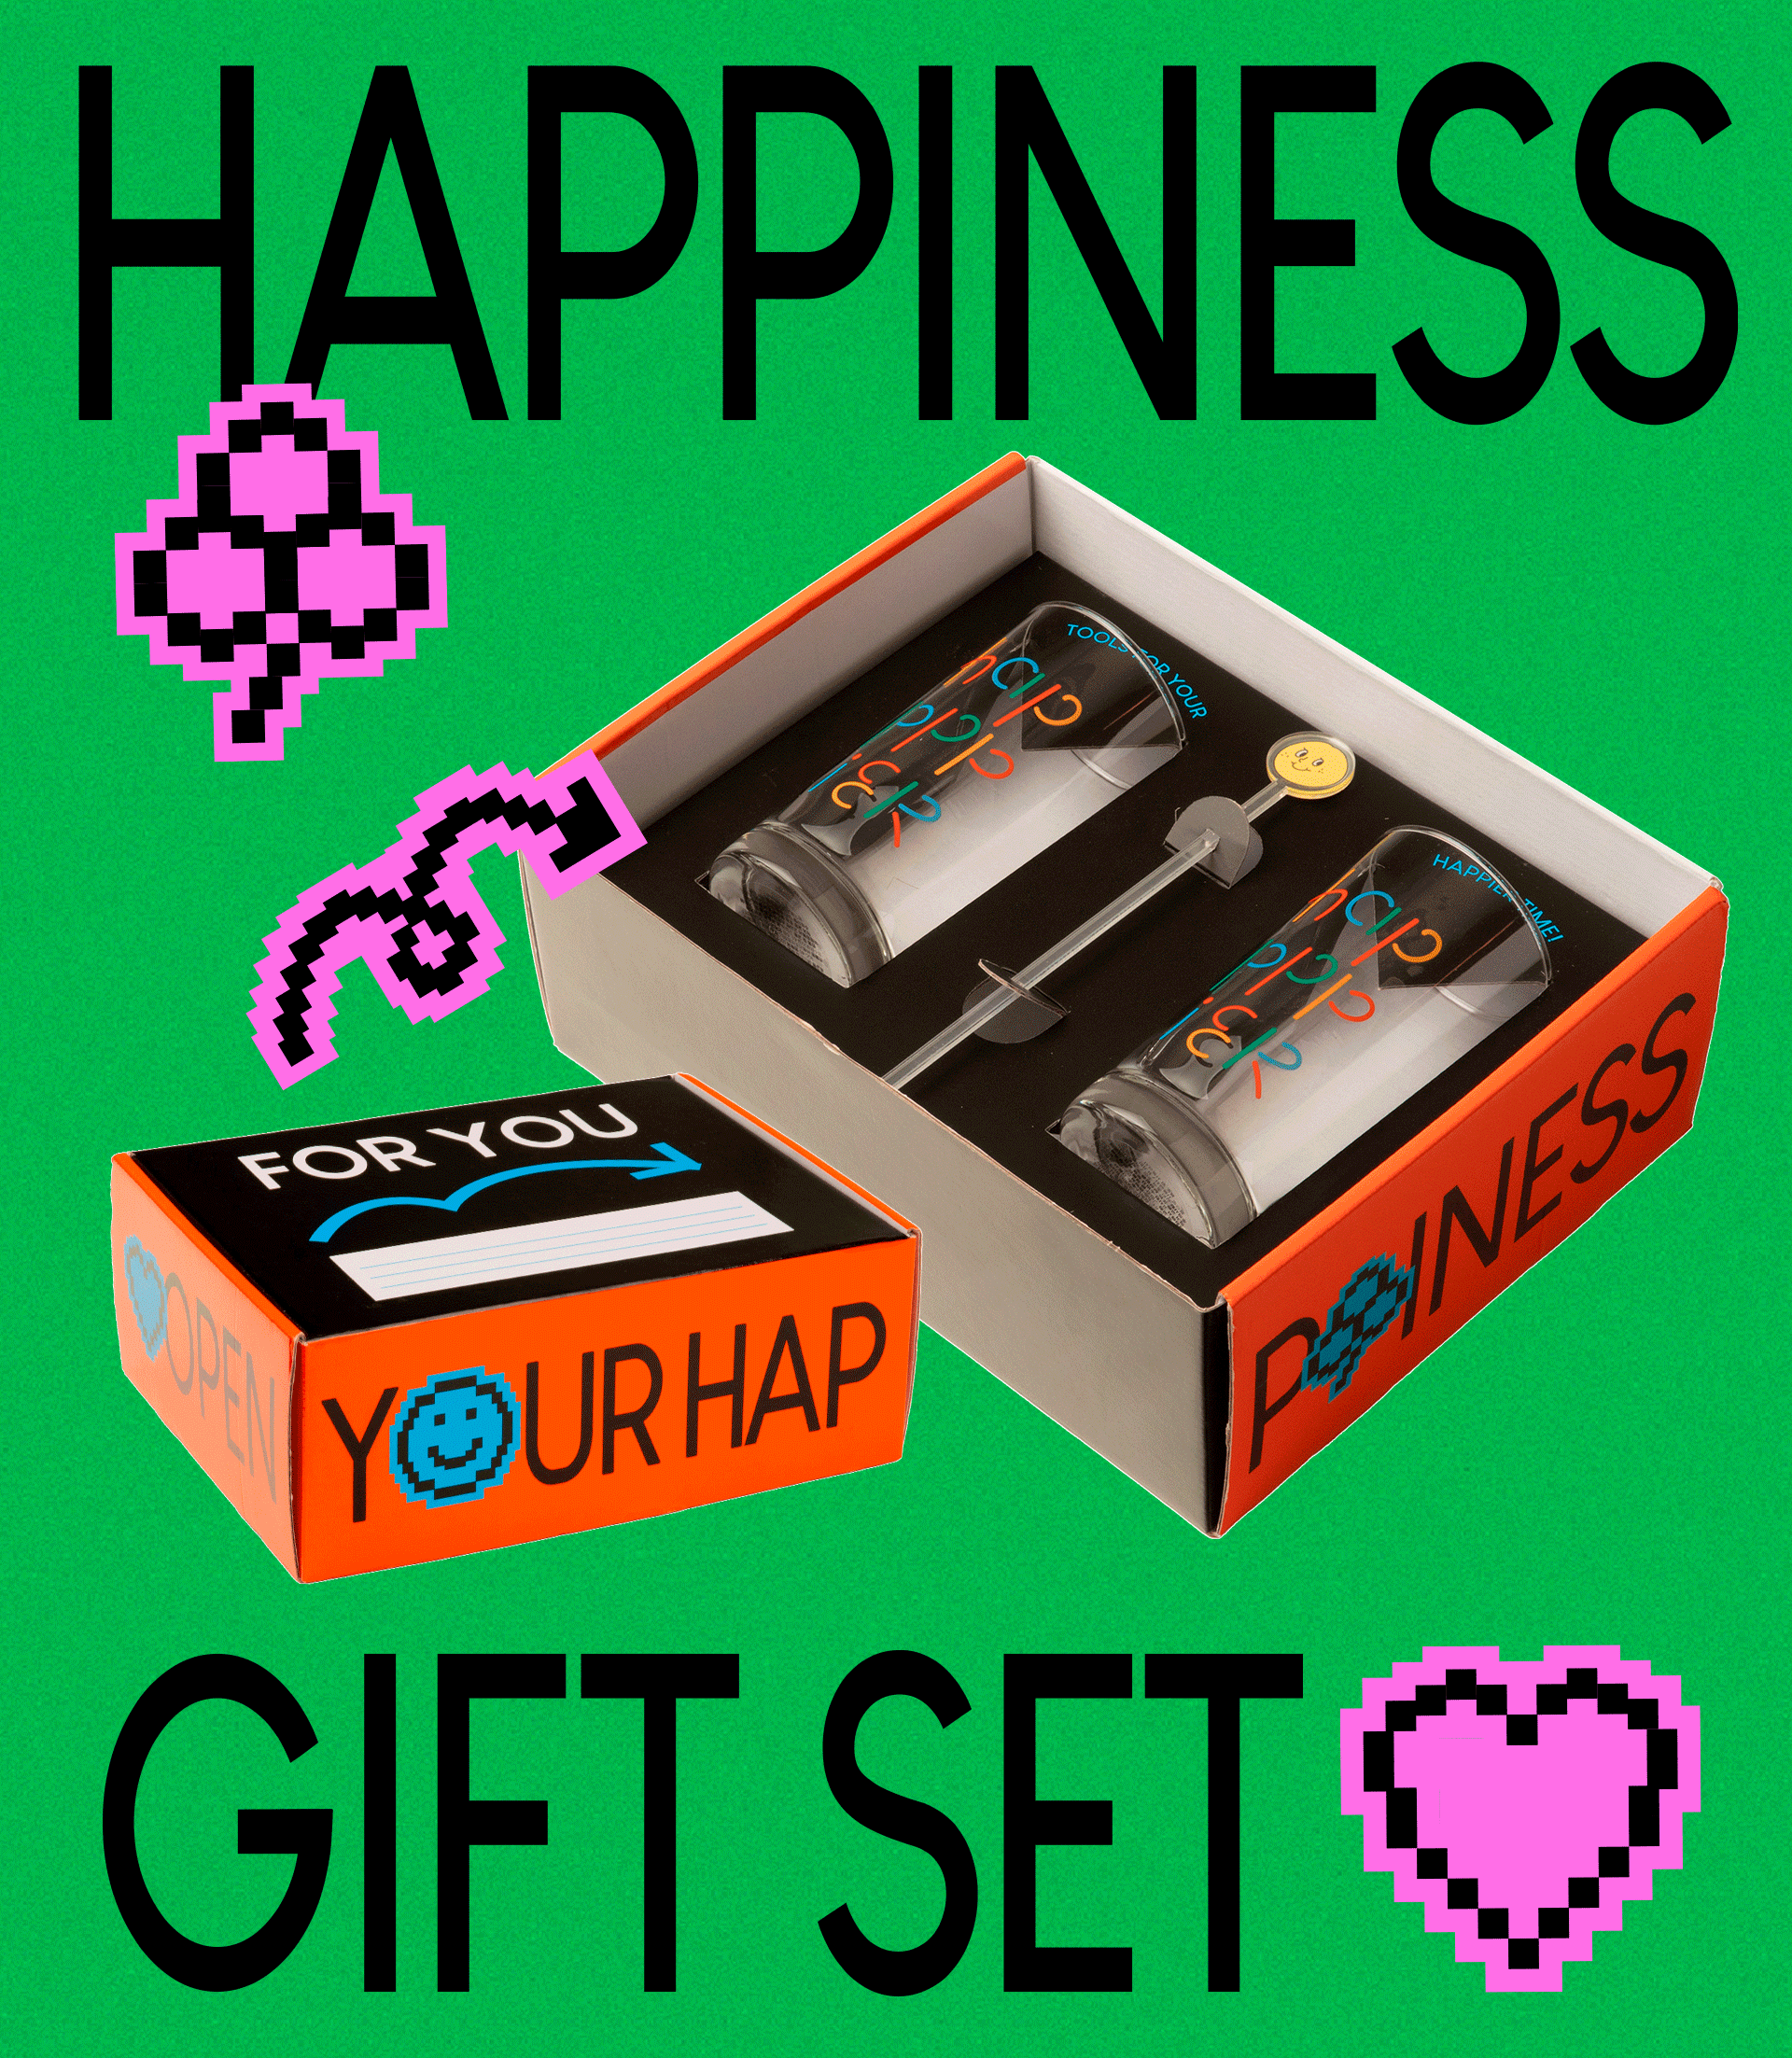 [gift box] HAPPINESS GIFT SET